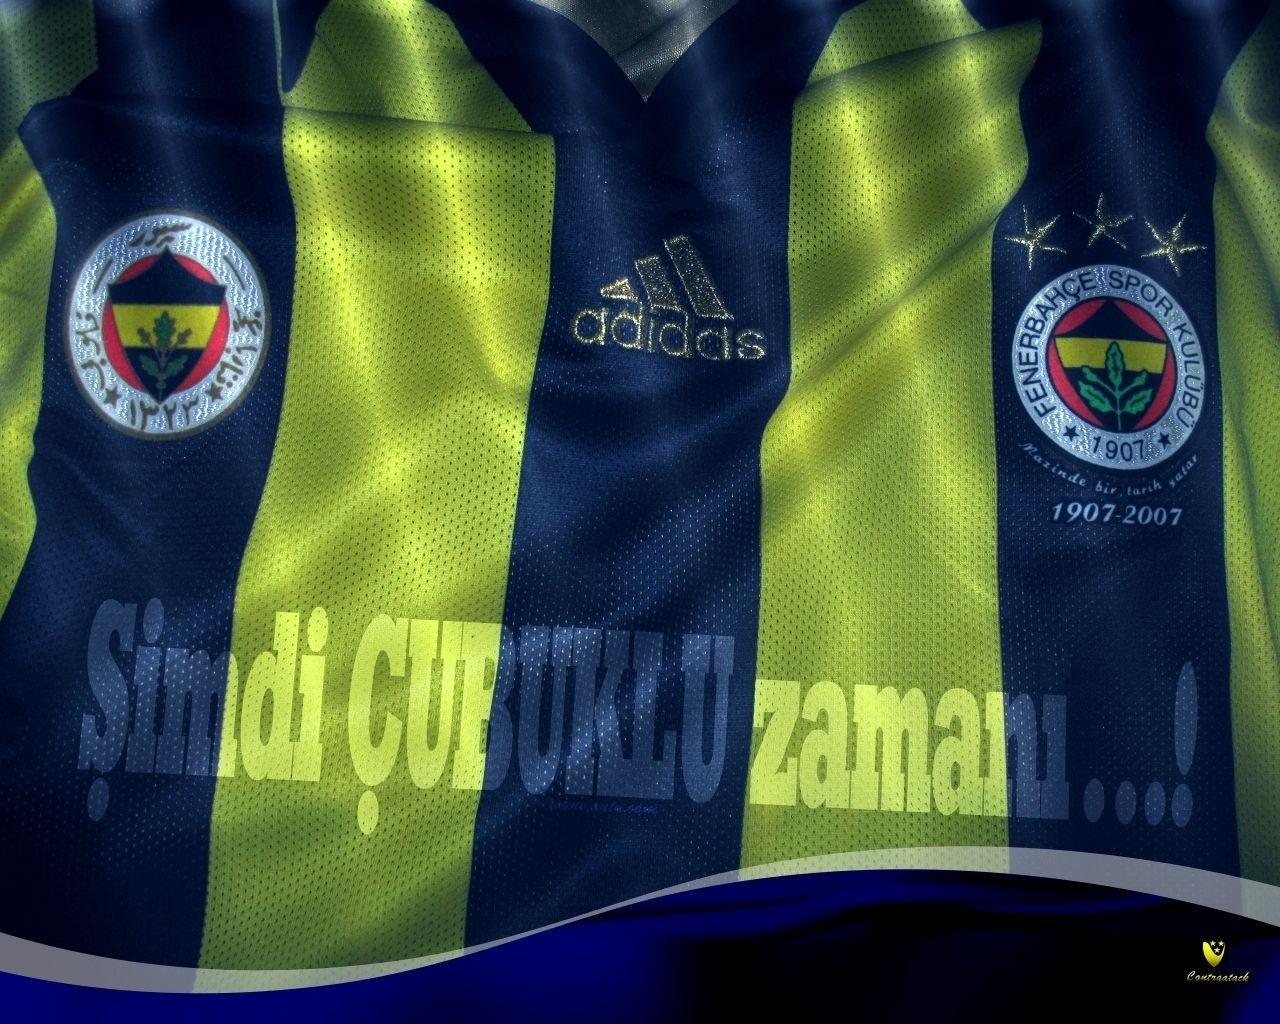 Fenerbahçe SK image Cubuklu256 HD wallpaper and background photo